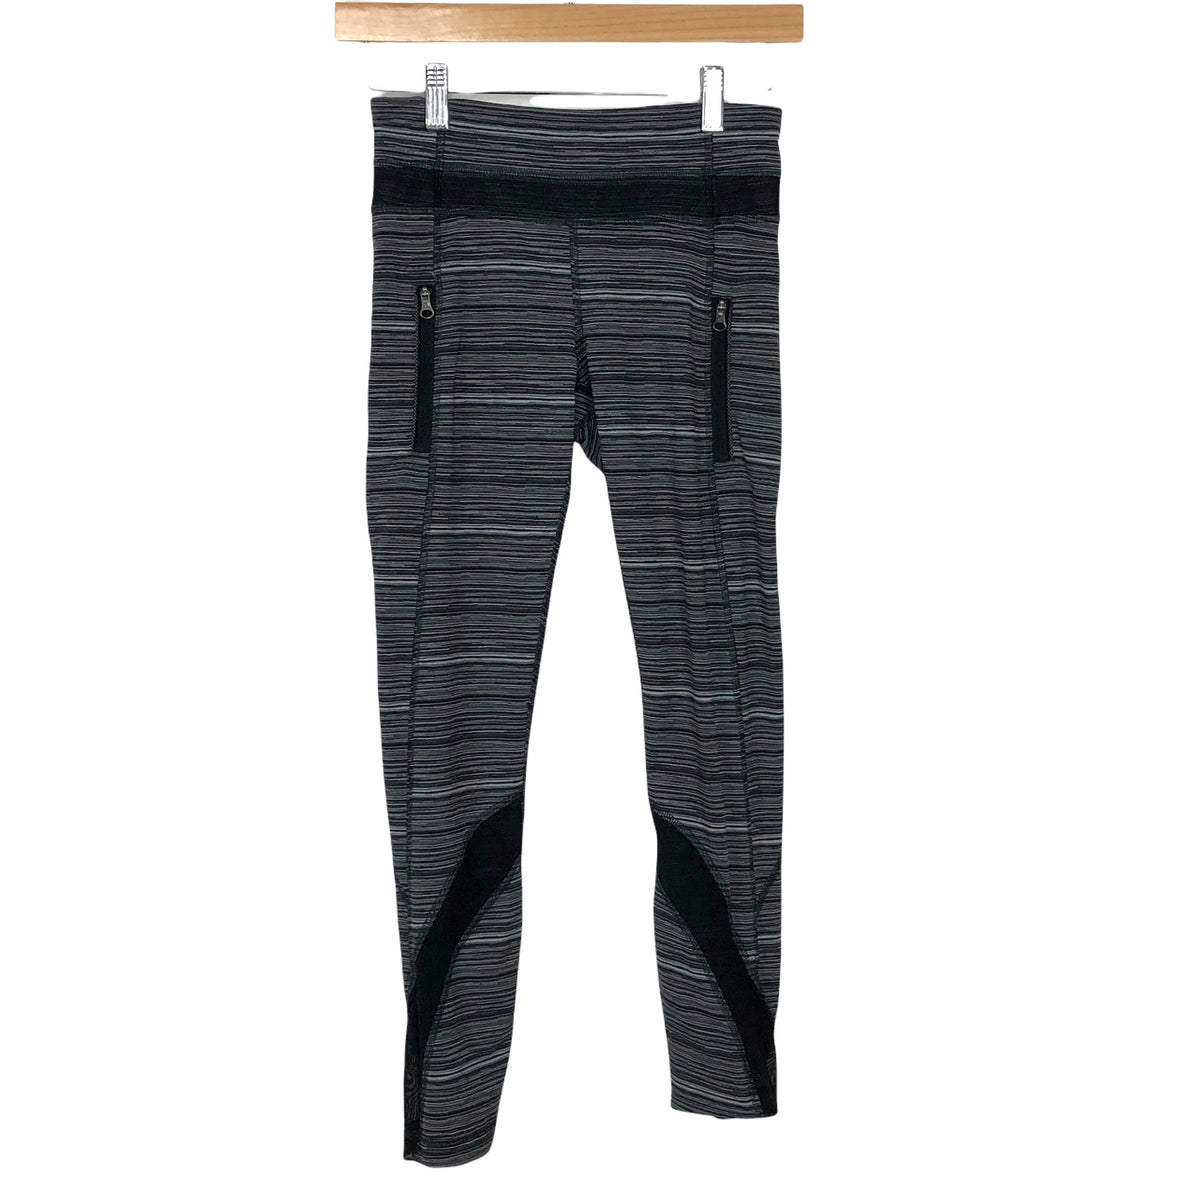 Lululemon Cut The Crop Faux Leather Side Pockets Leggings Size 4  Black/Striped